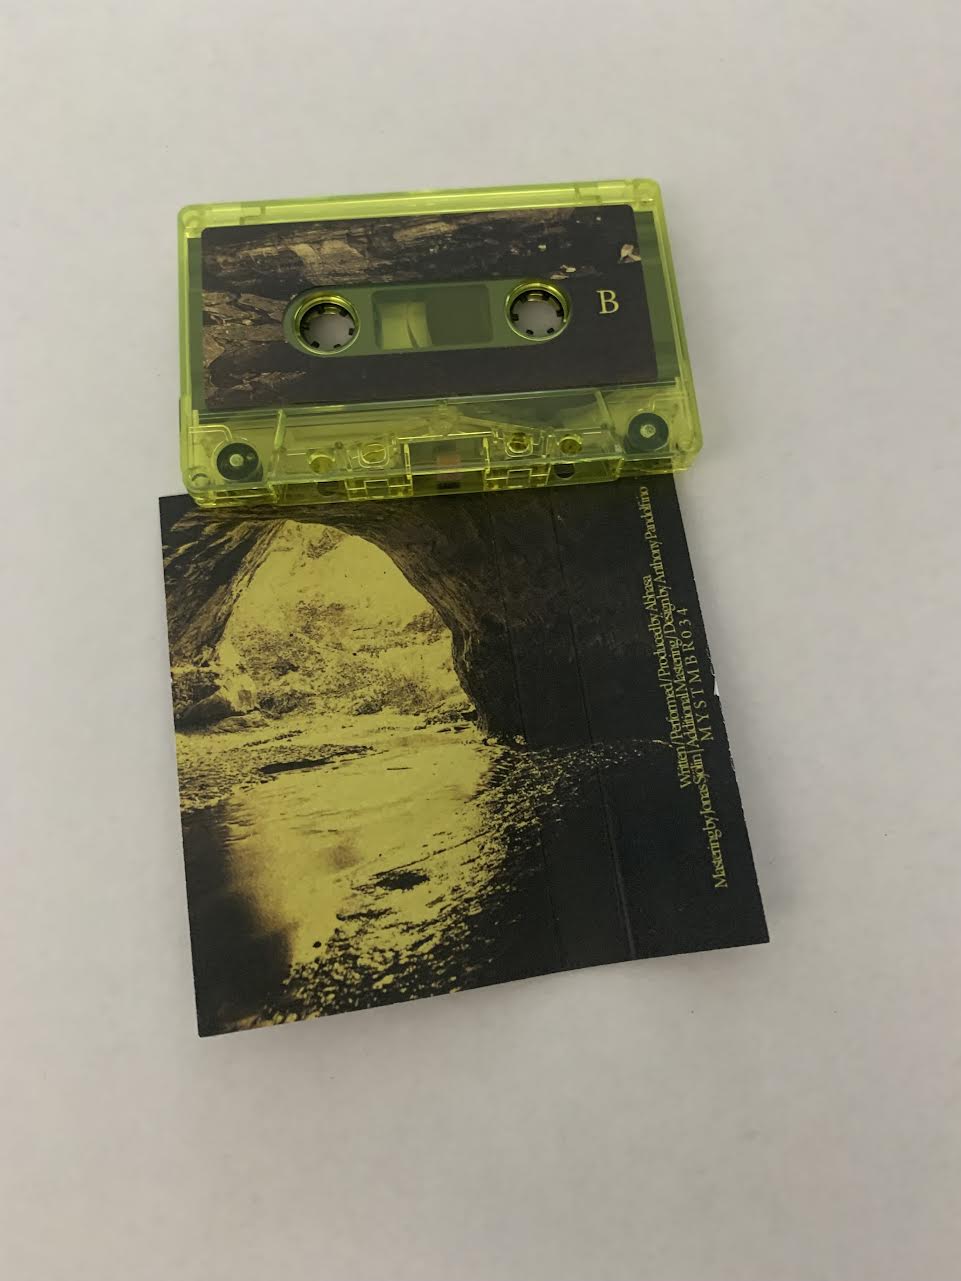 Abhasa - १ [Post Metal] (Mystic Timbre - Tape - 4/21/20)